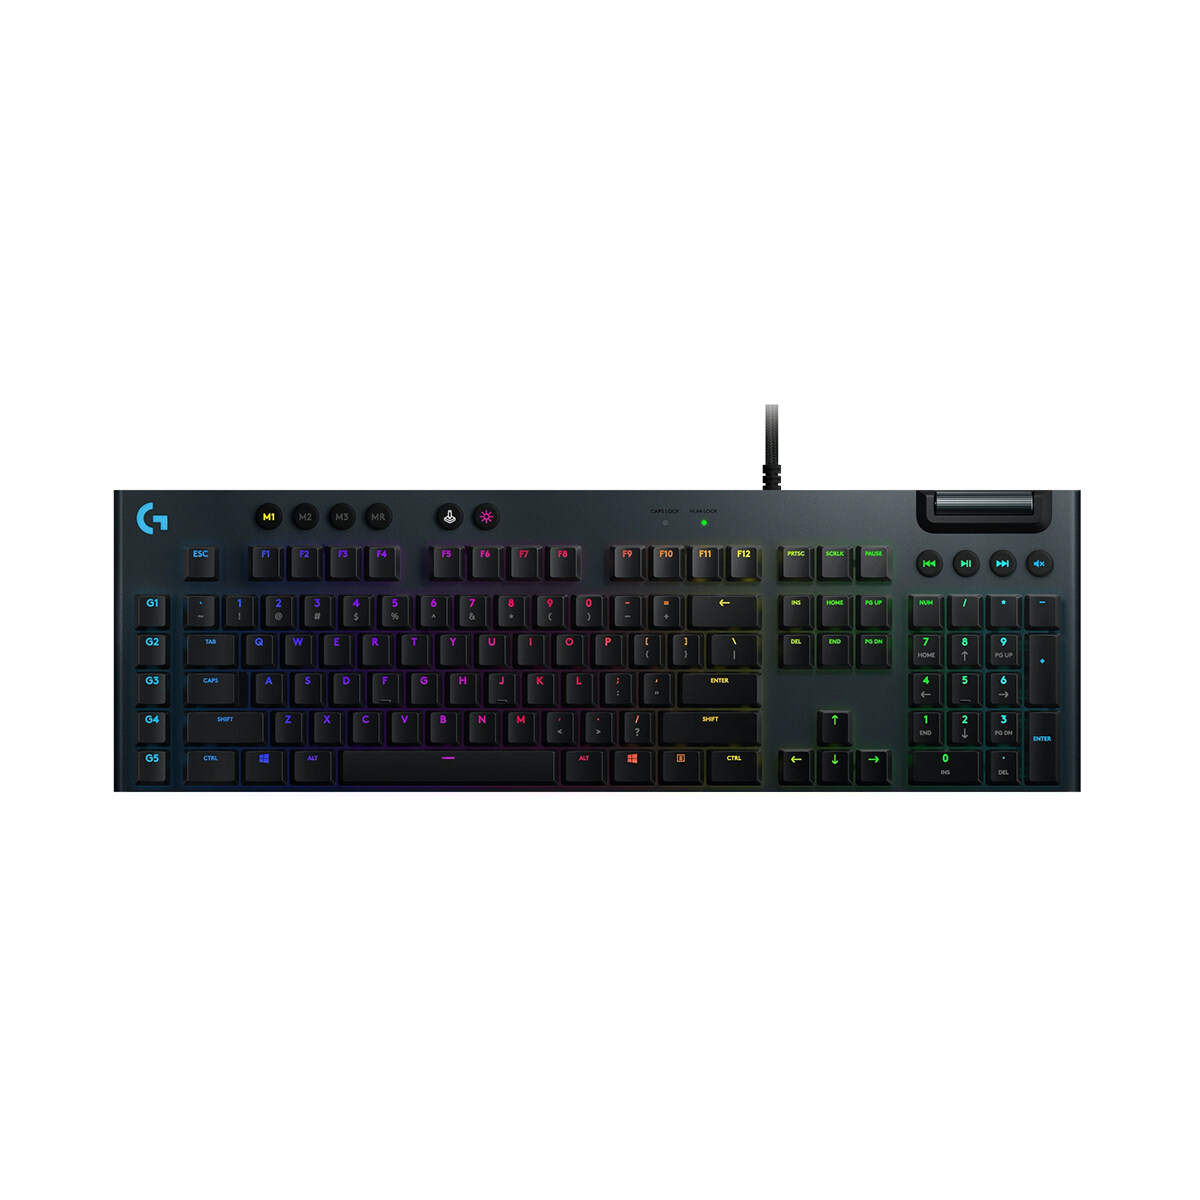 Logitech G813 Lightsync RGB Mechanical Gaming Keyboard (Tactile / Linear / Clicky) Ultra Thin, Logitech G HUB